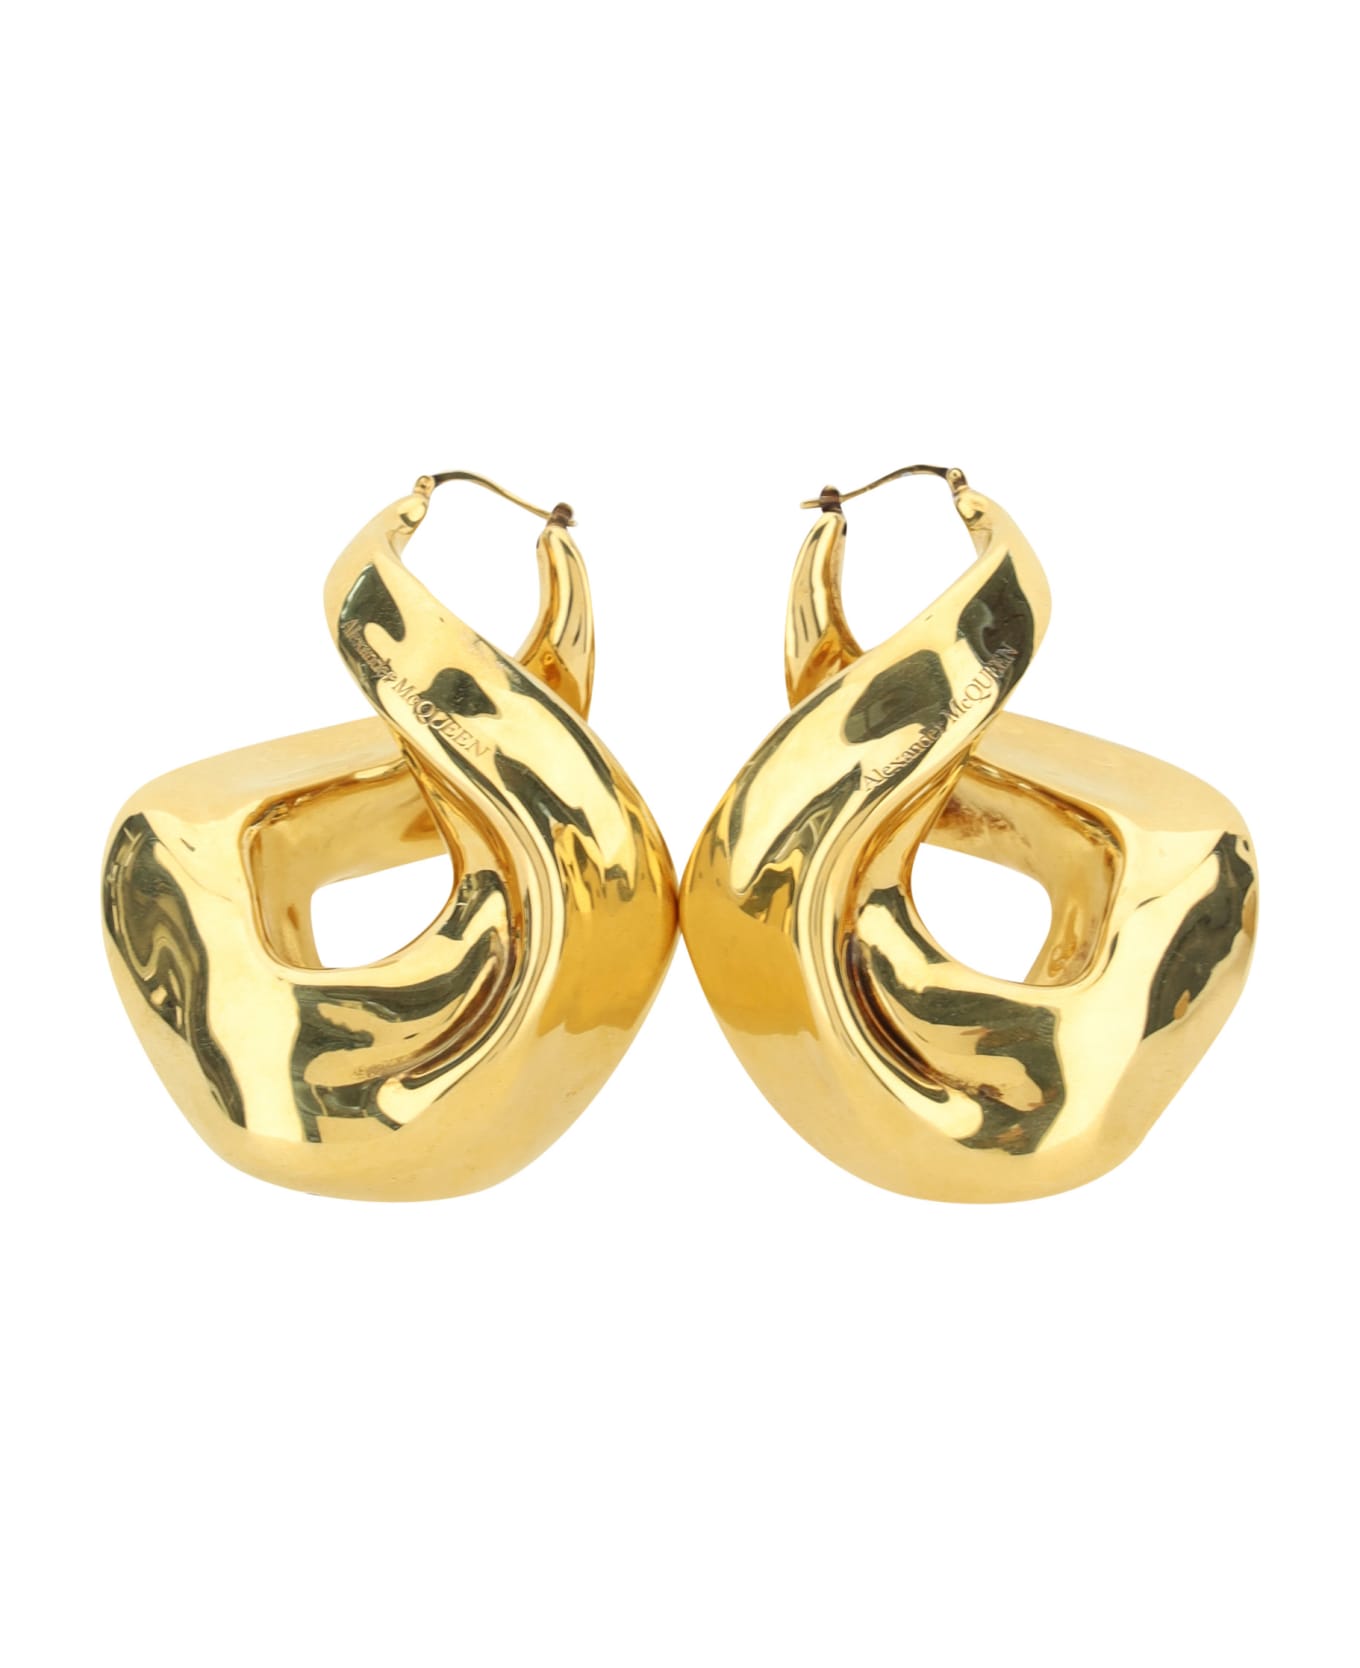 Alexander McQueen Twisted Earrings - Oro O.b Antl イヤリング